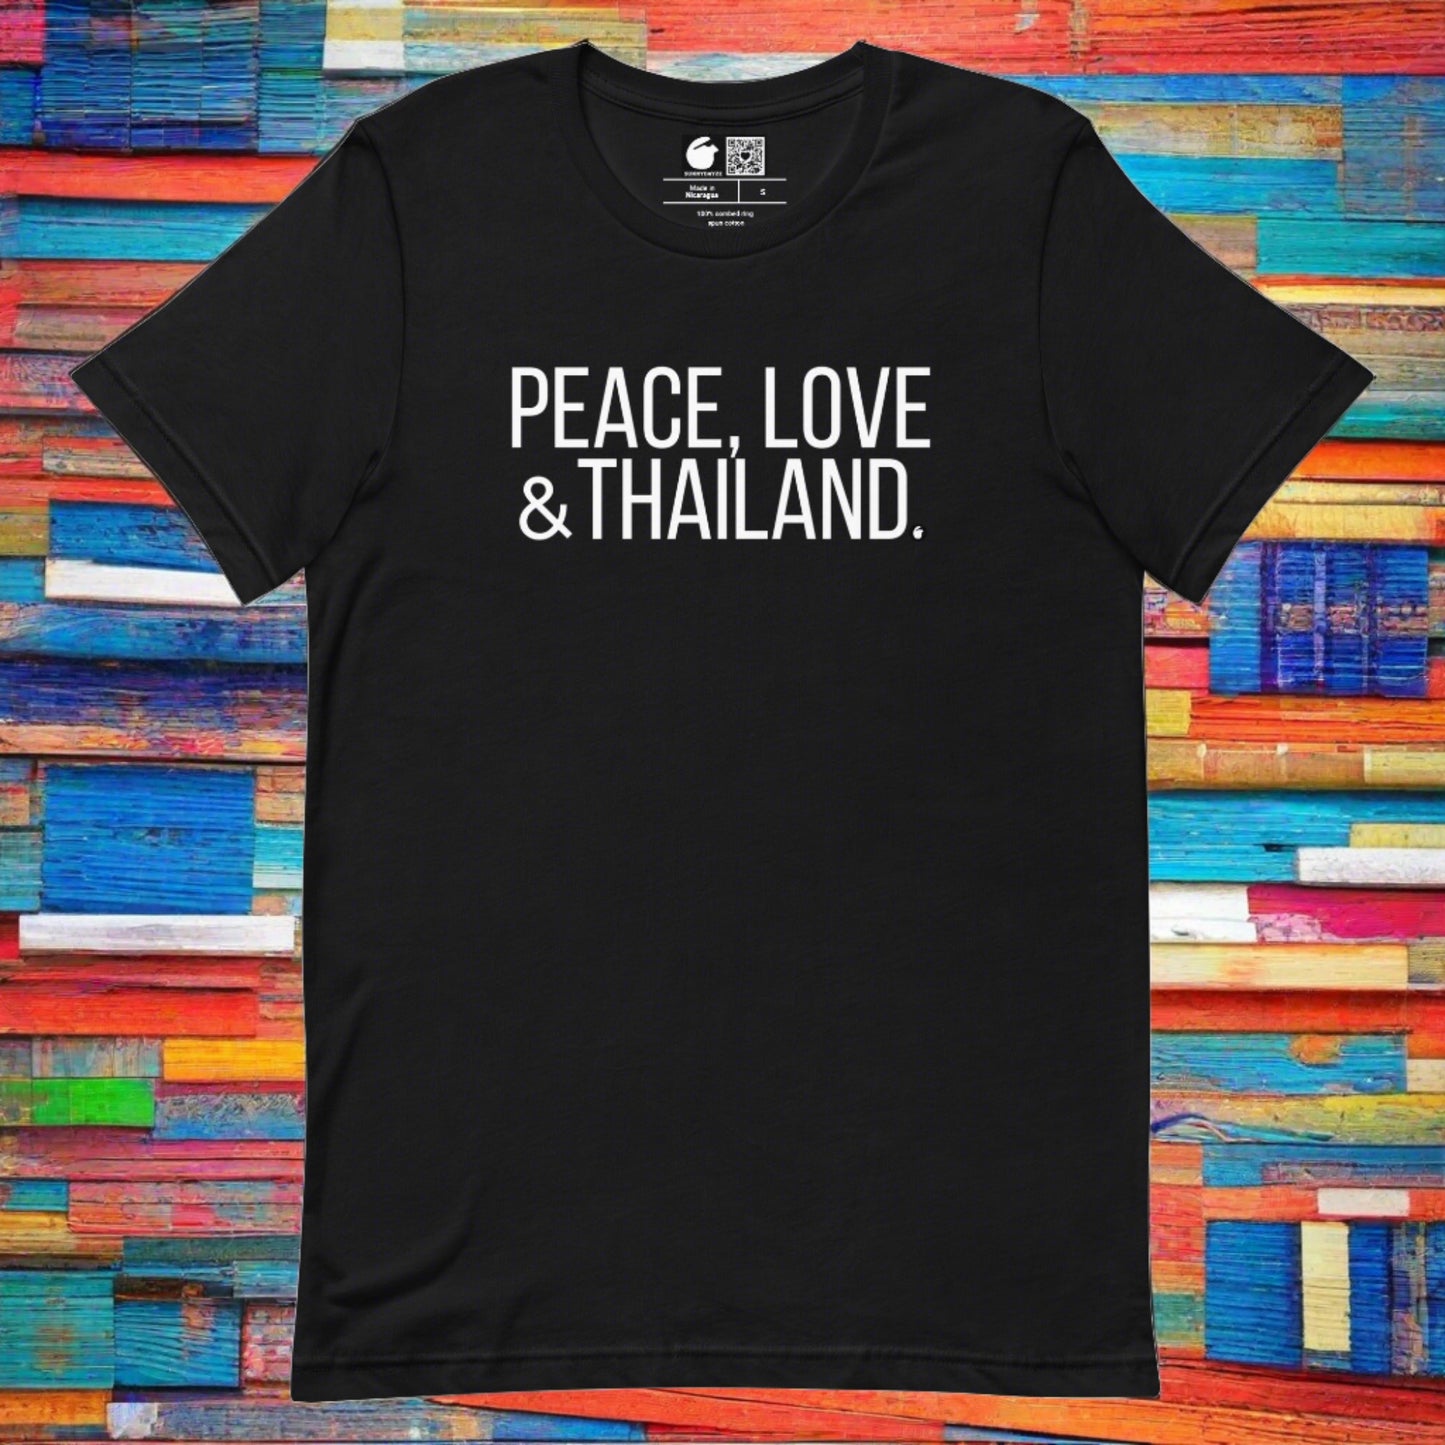 THAILAND Short-Sleeve Unisex t-shirt